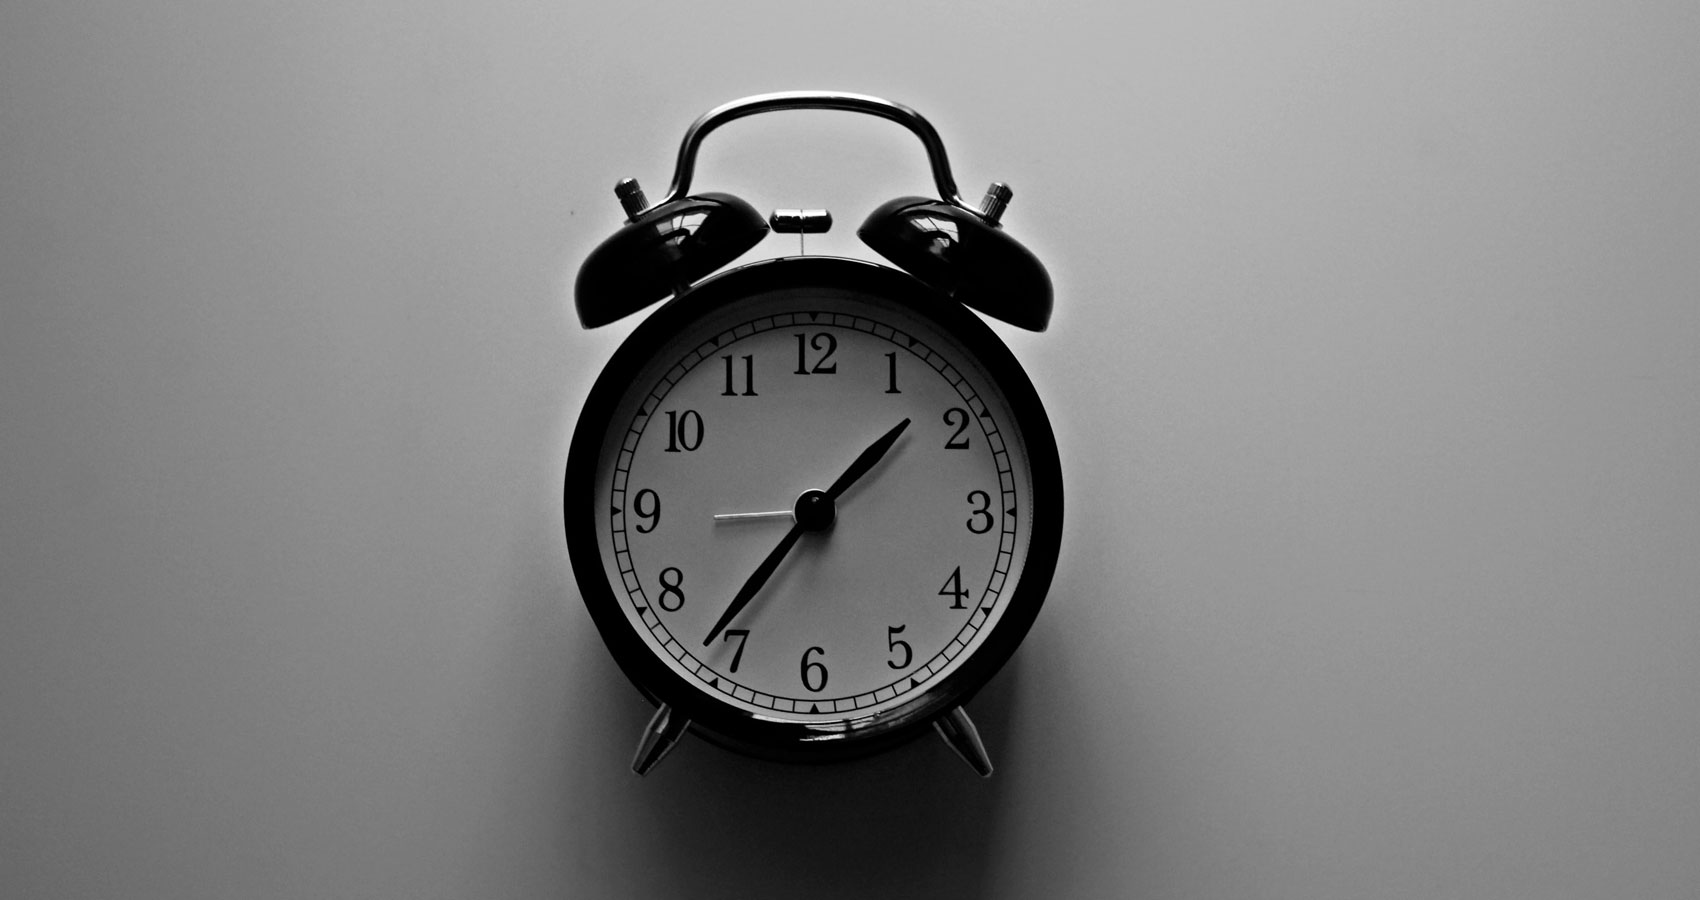 When Alarm Clocks Stop Failing, poetry by Arimaya Ryan at Spillwords.com